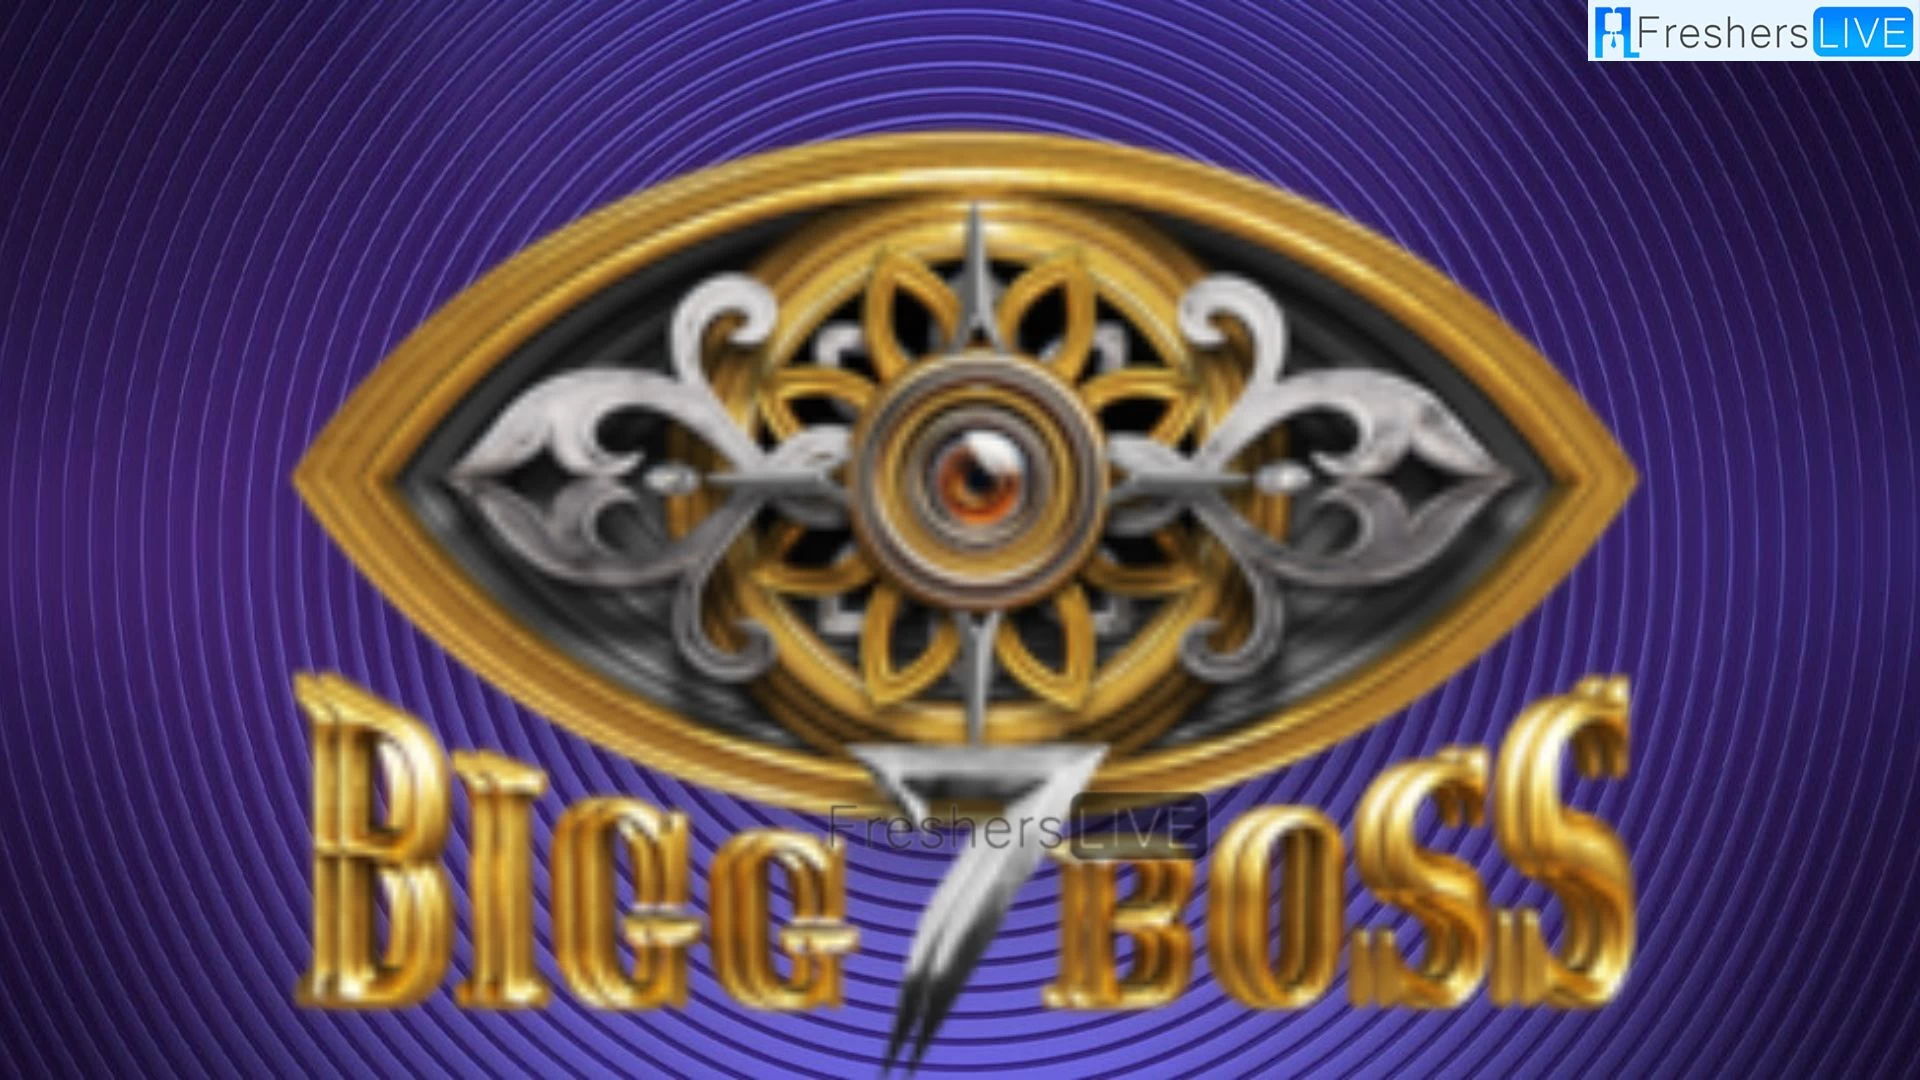 Bigg Boss Tamil Temporada 7, ¿Dónde ver la Temporada 7 de Bigg Boss Tamil?